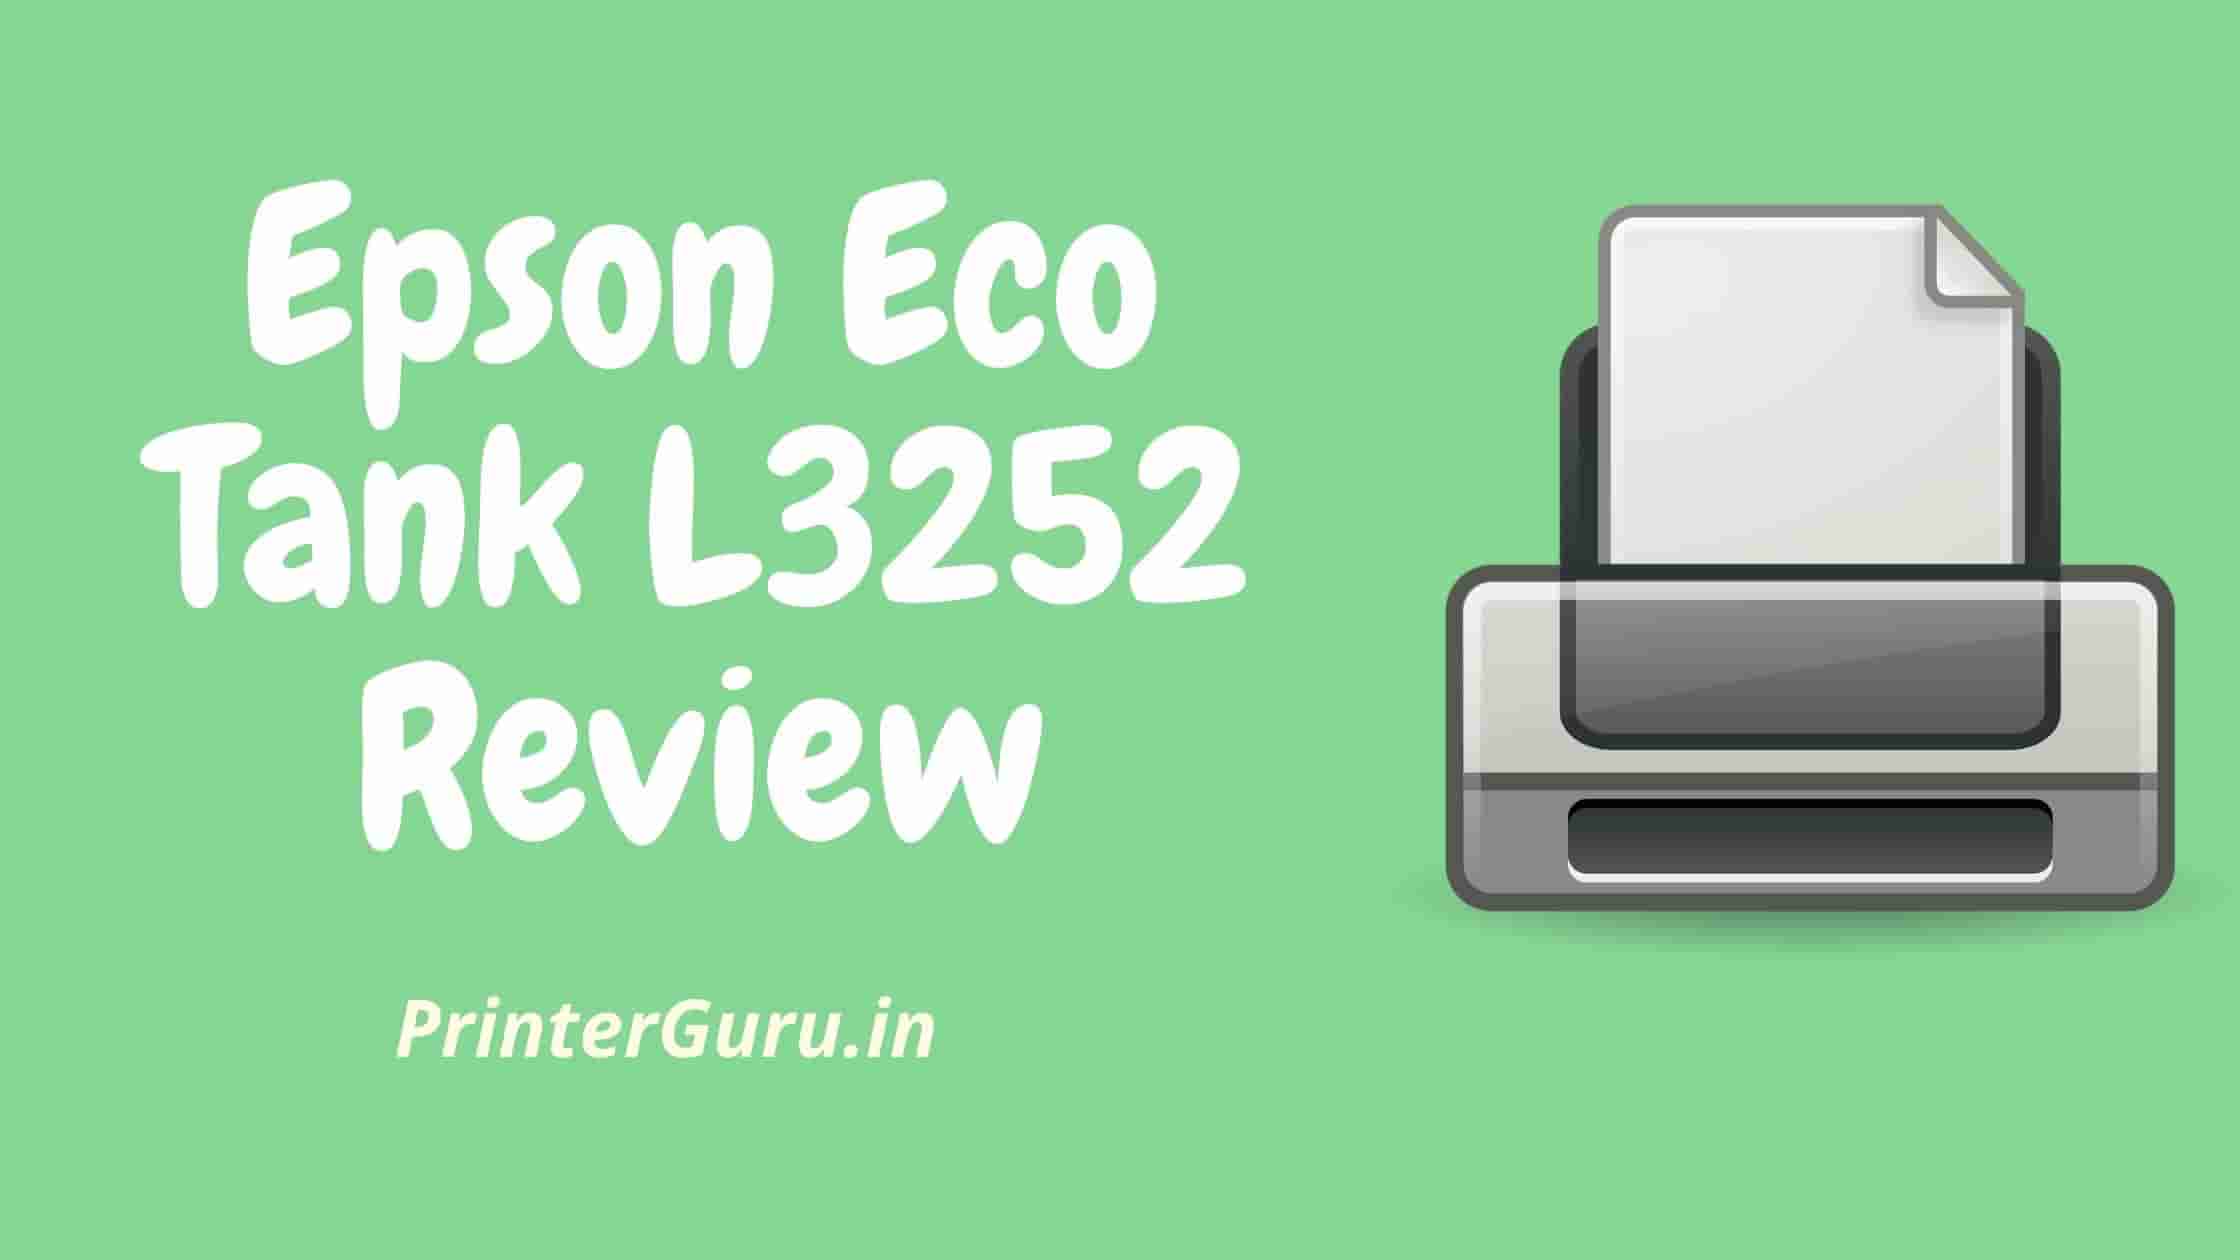 Epson Eco Tank L3252 Review